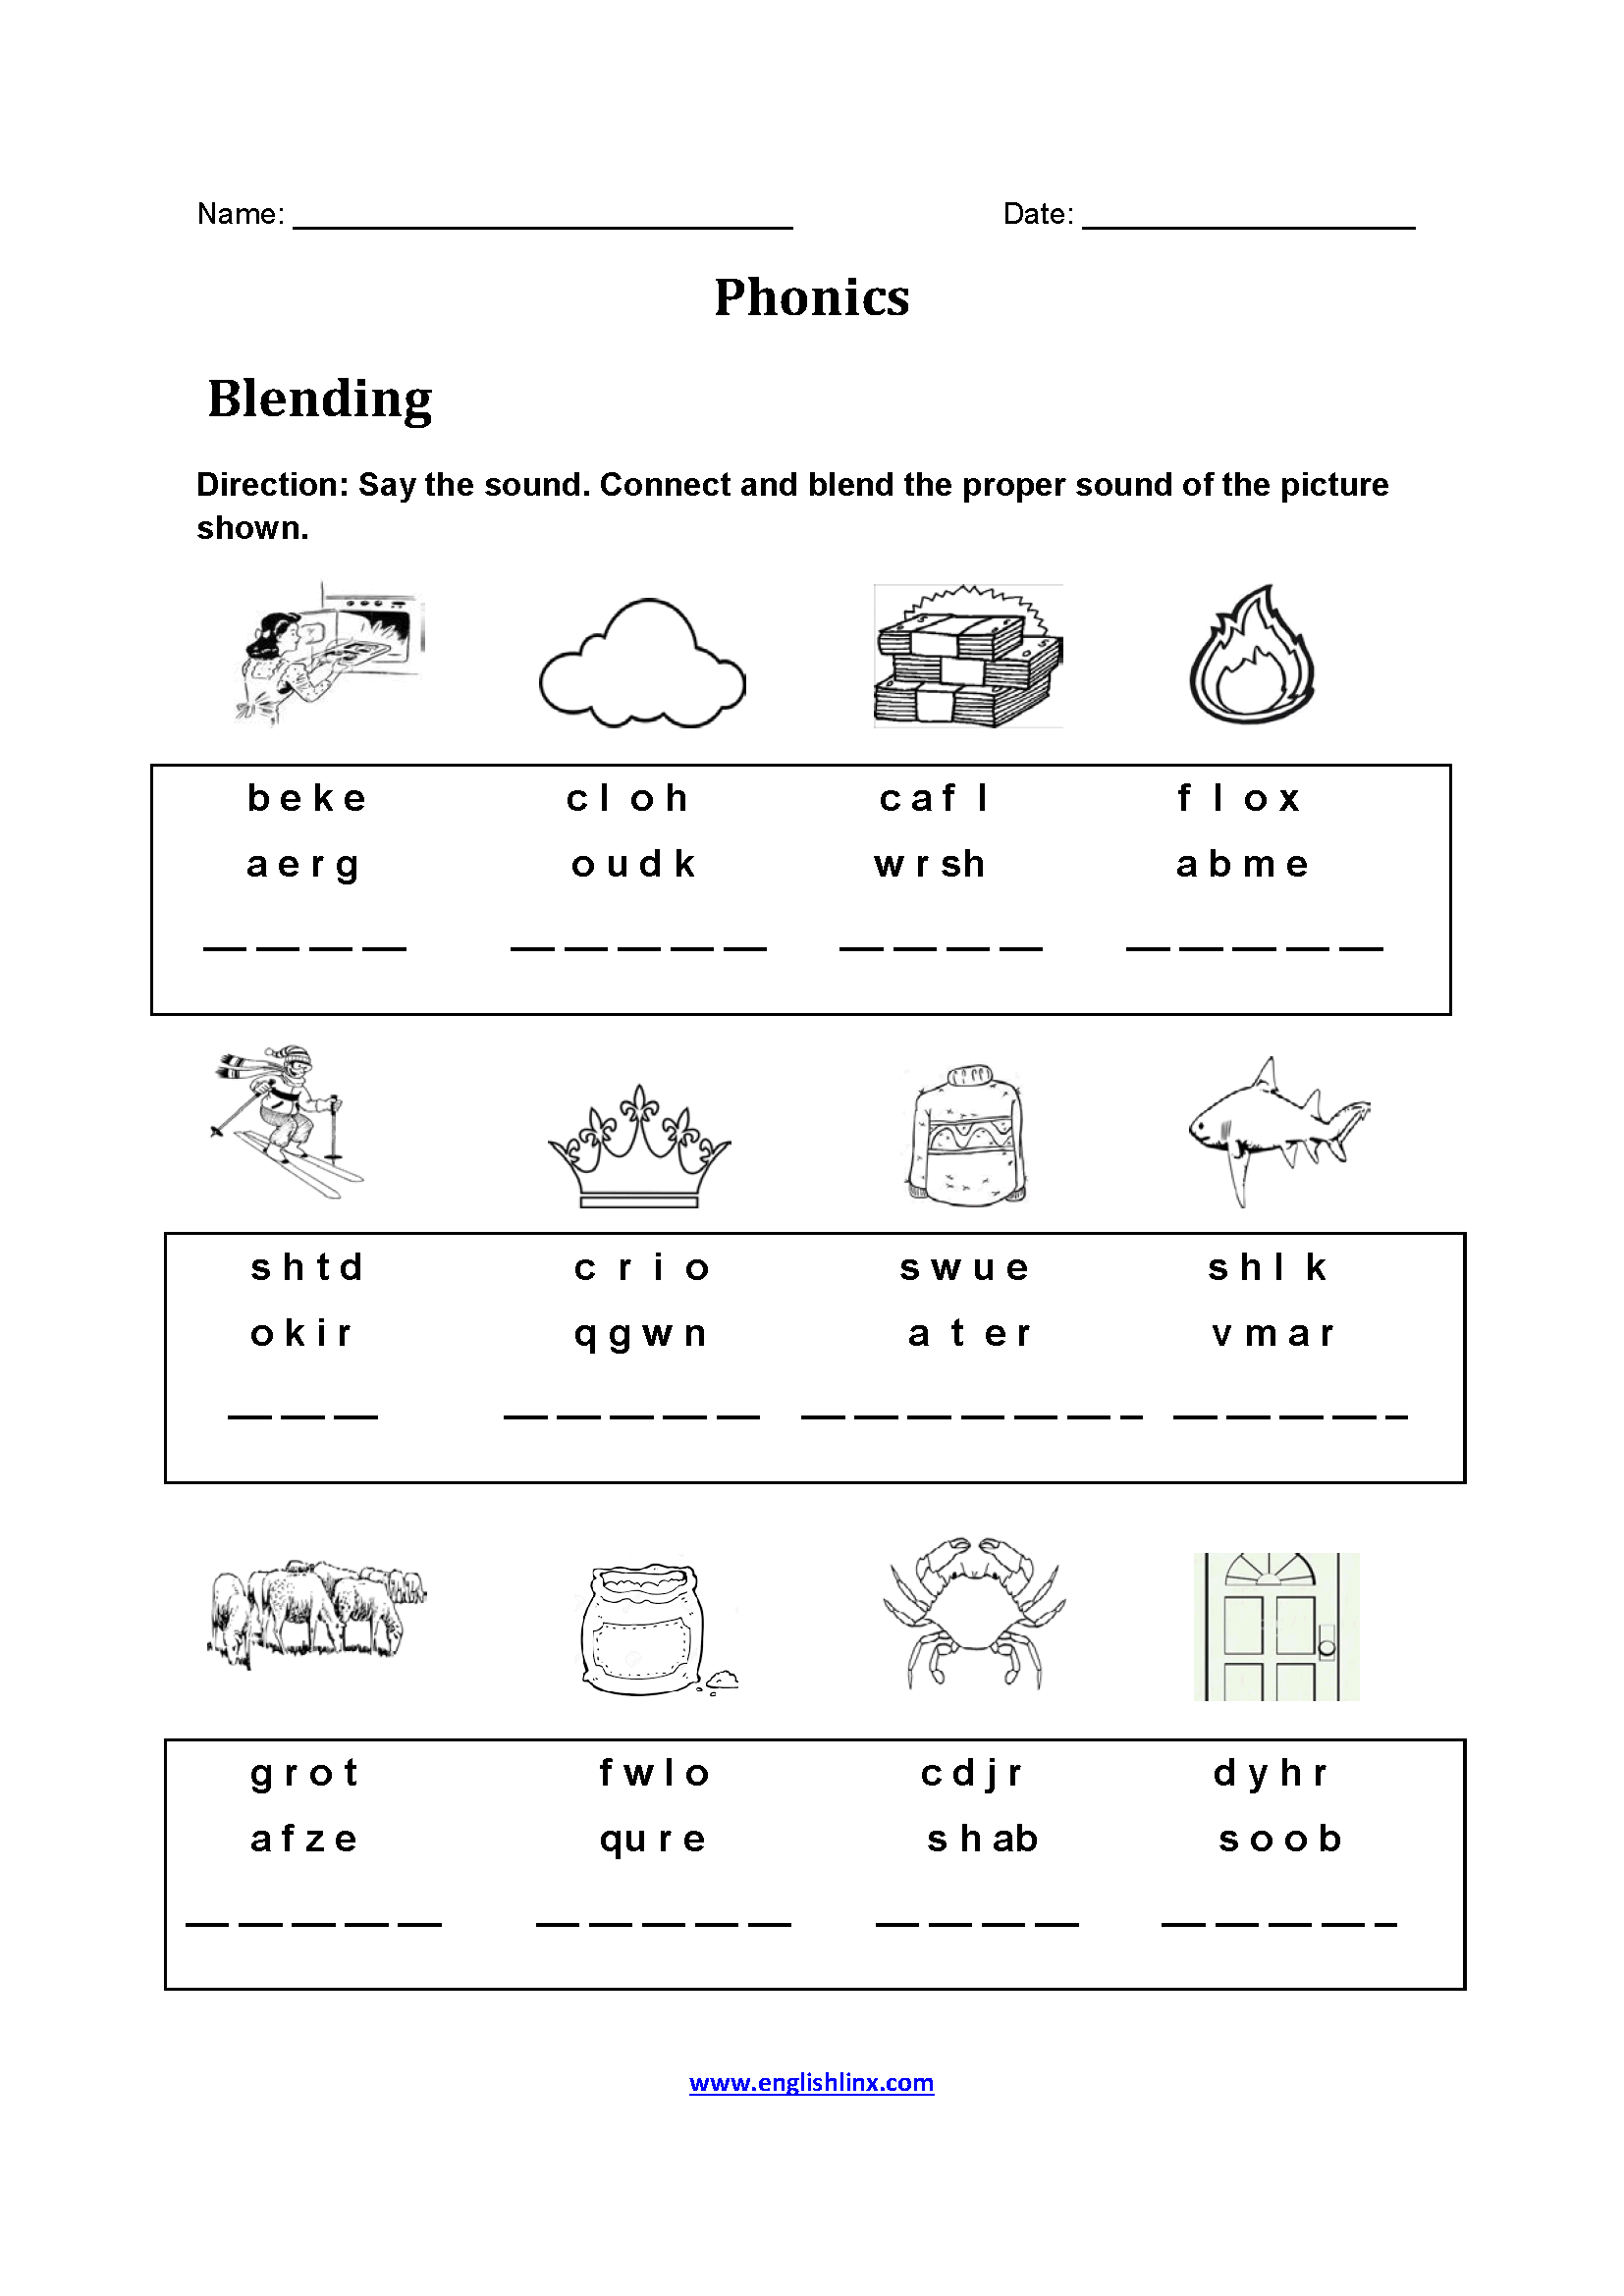 Blending Phonics Worksheets